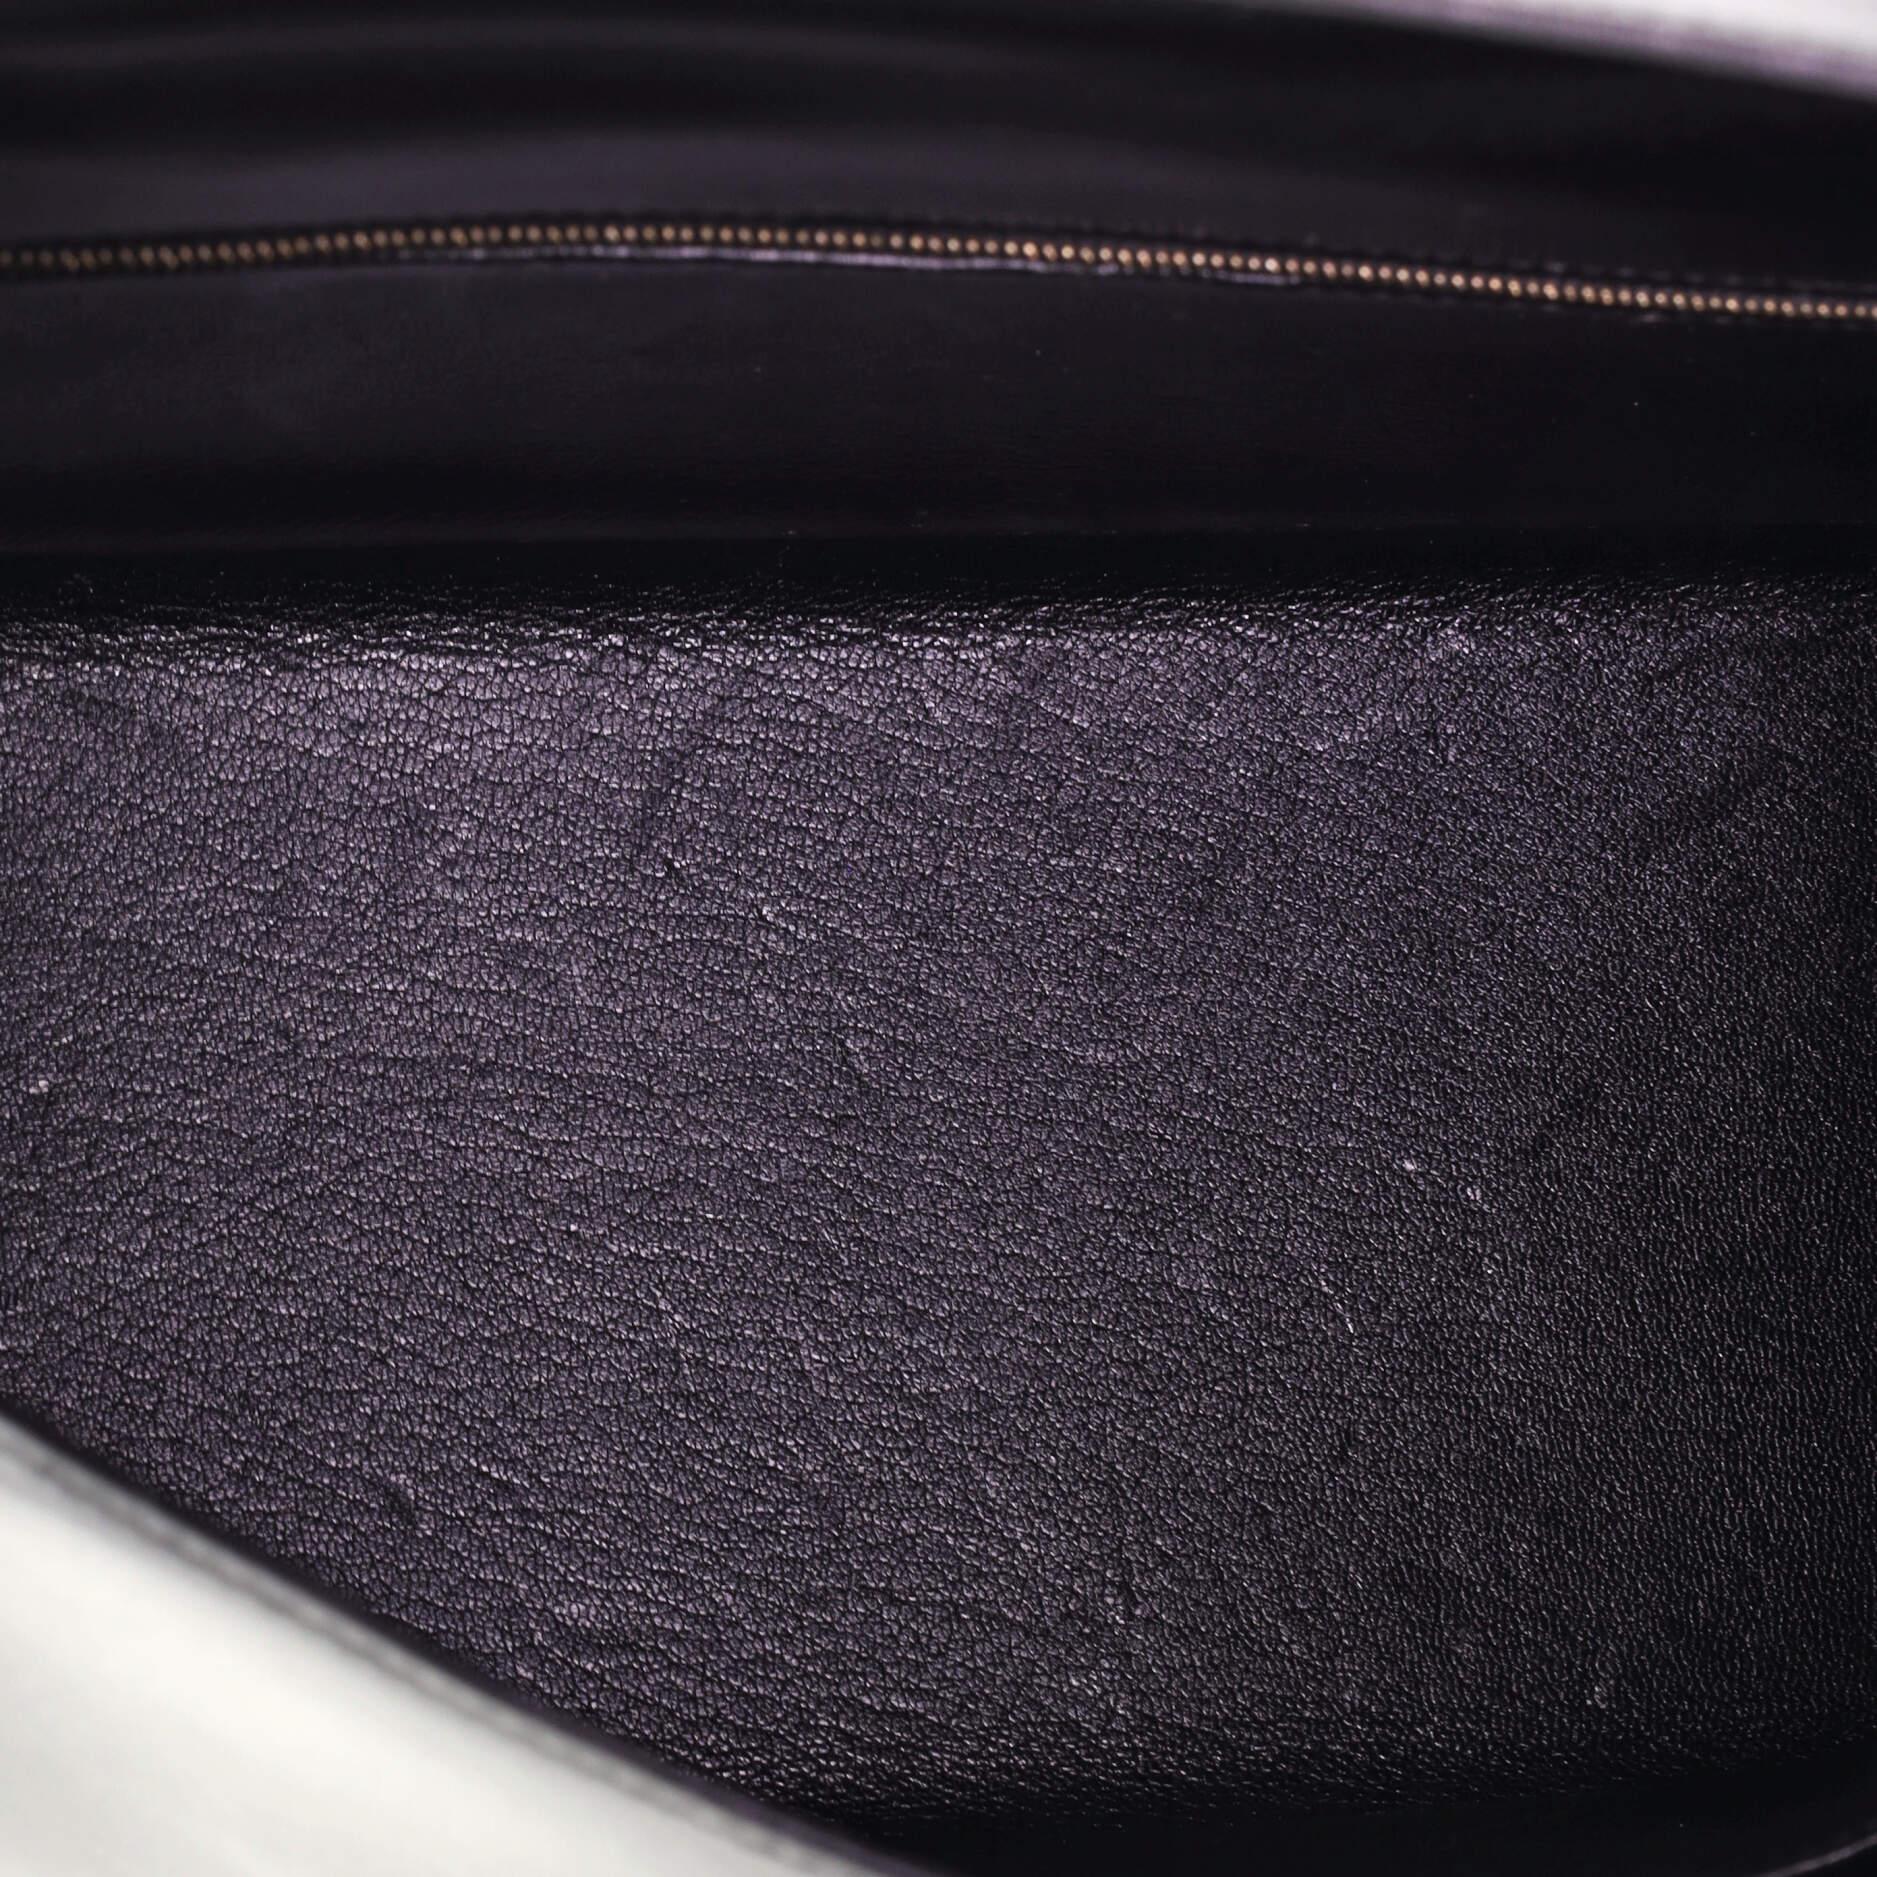 Hermes Kelly Handbag Noir Box Calf with Gold Hardware 32 1